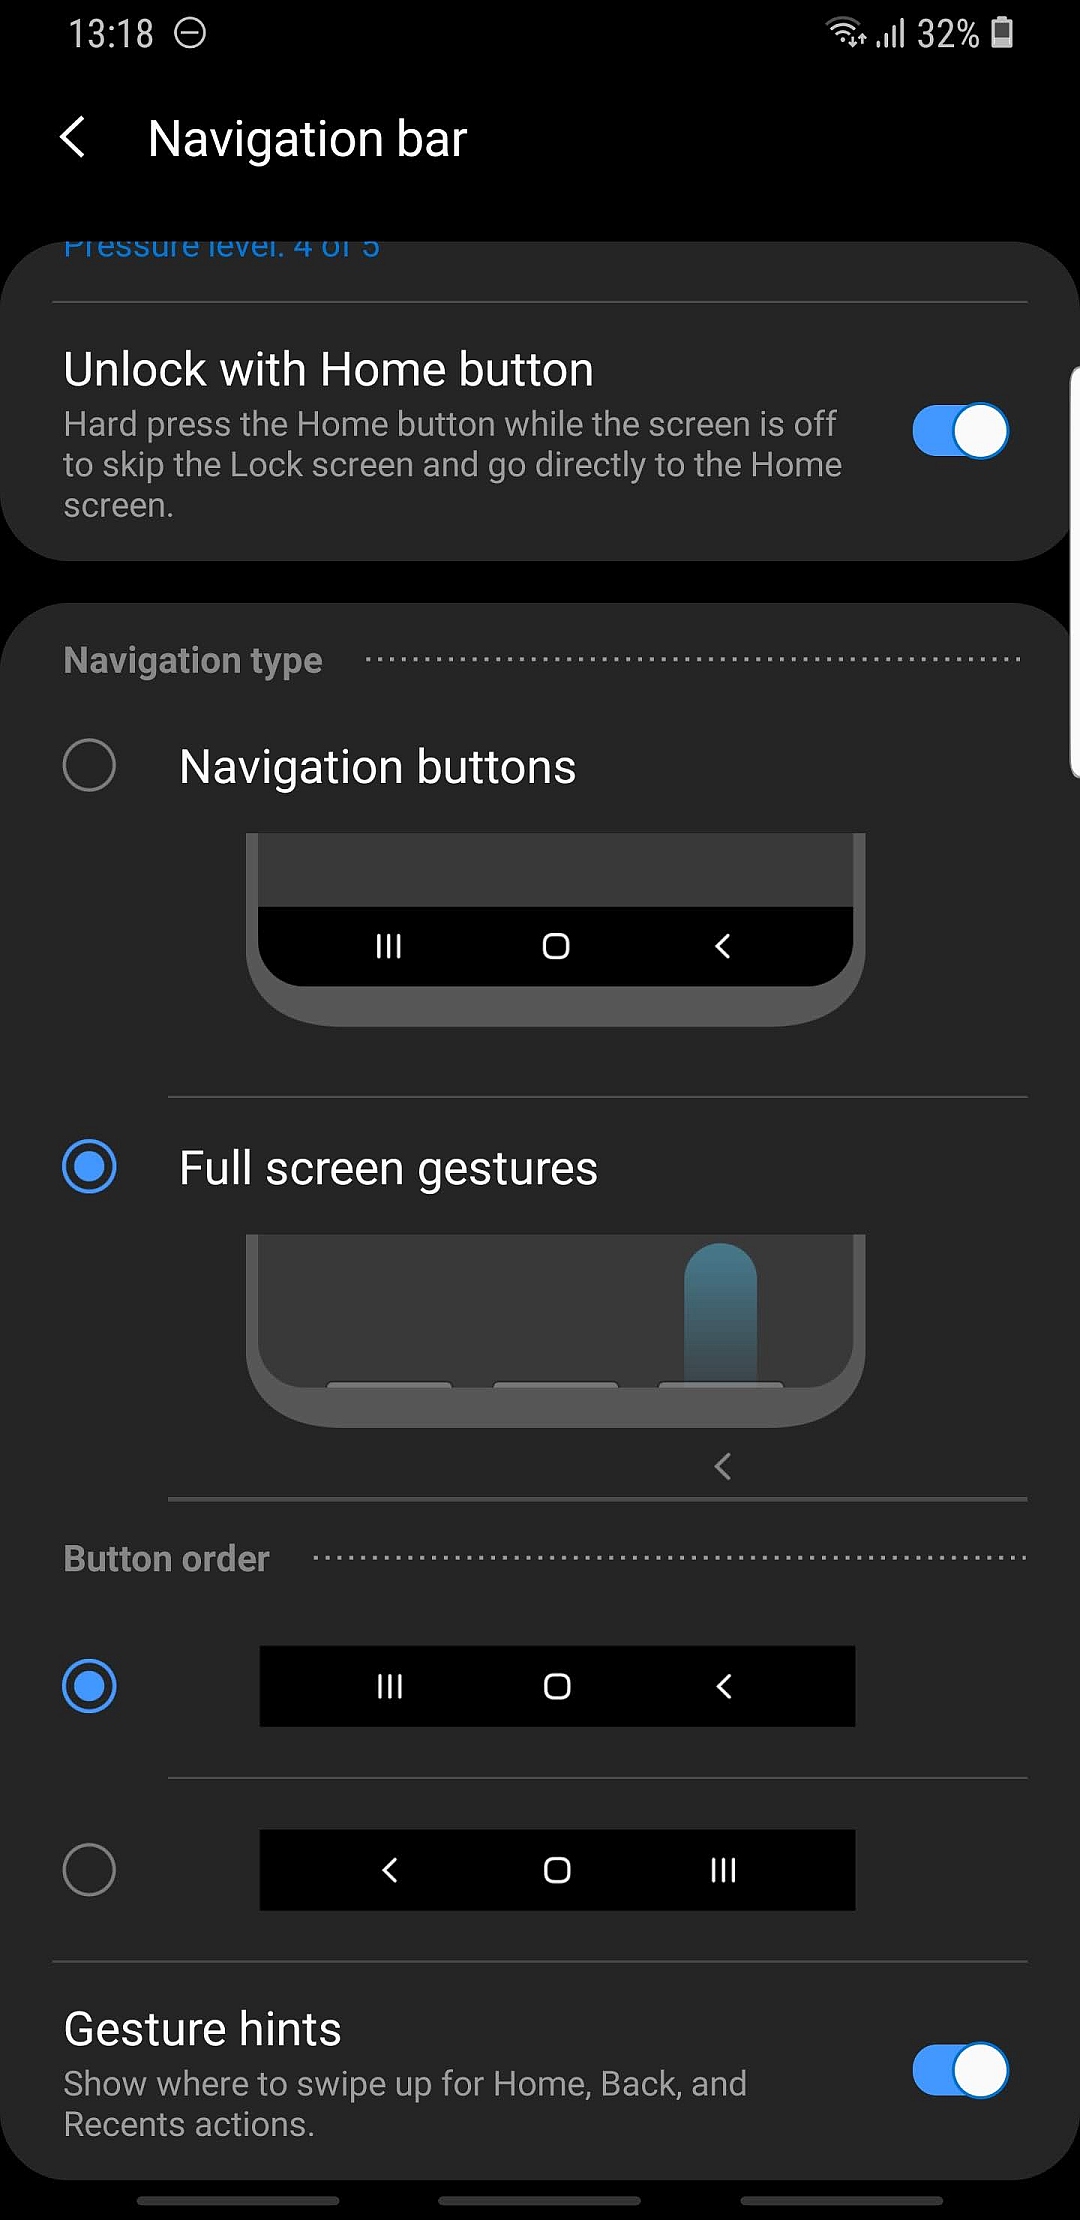 Samsung One UI (Android Pie) feature focus: Navigation button gestures - SamMobile